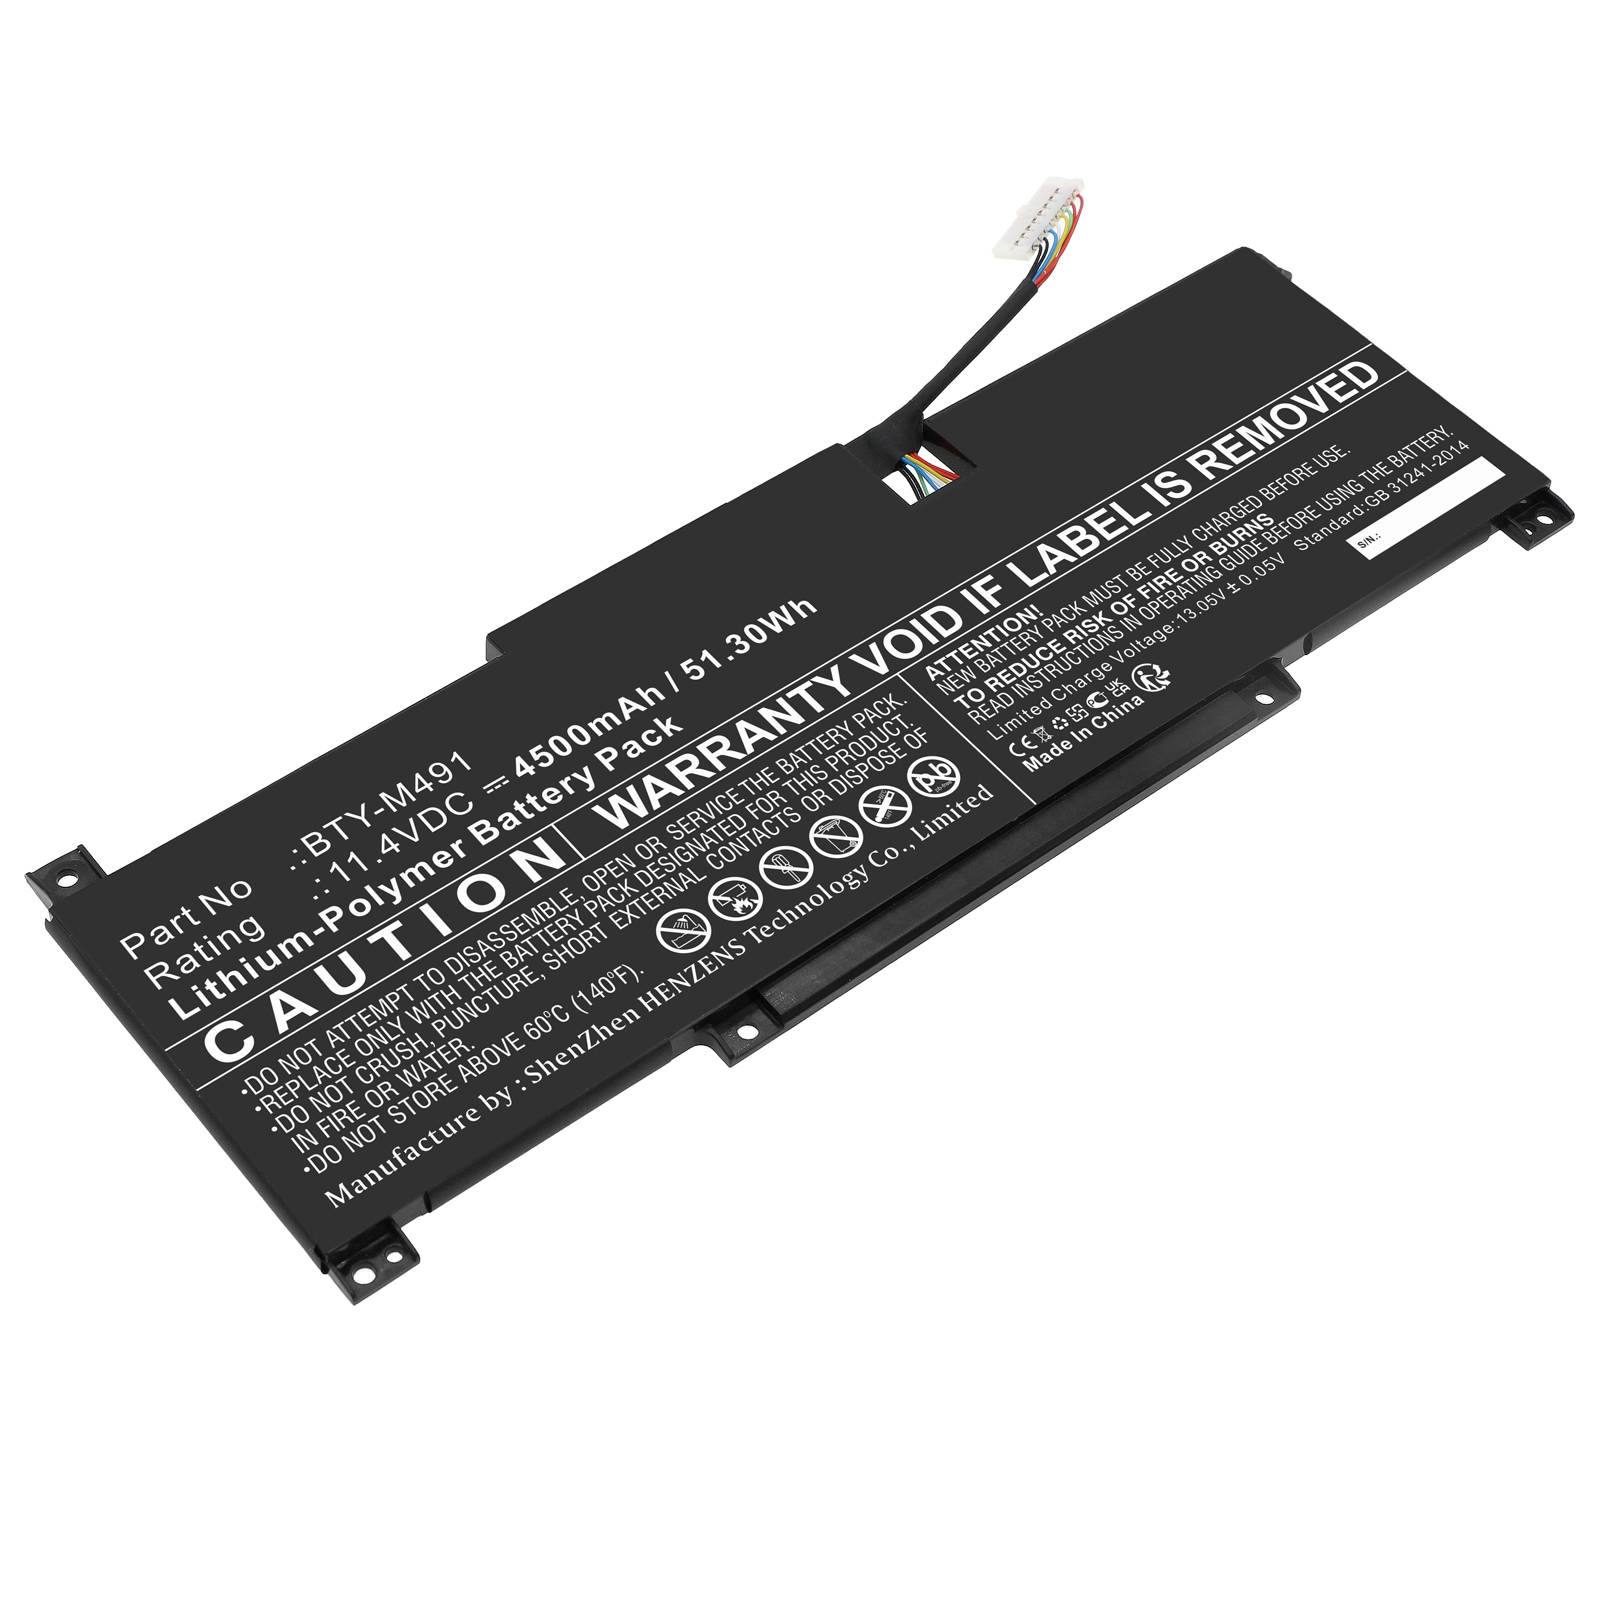 Synergy Digital Laptop Battery, Compatible with MSI BTY-M491 Laptop Battery (Li-Pol, 11.4V, 4500mAh)